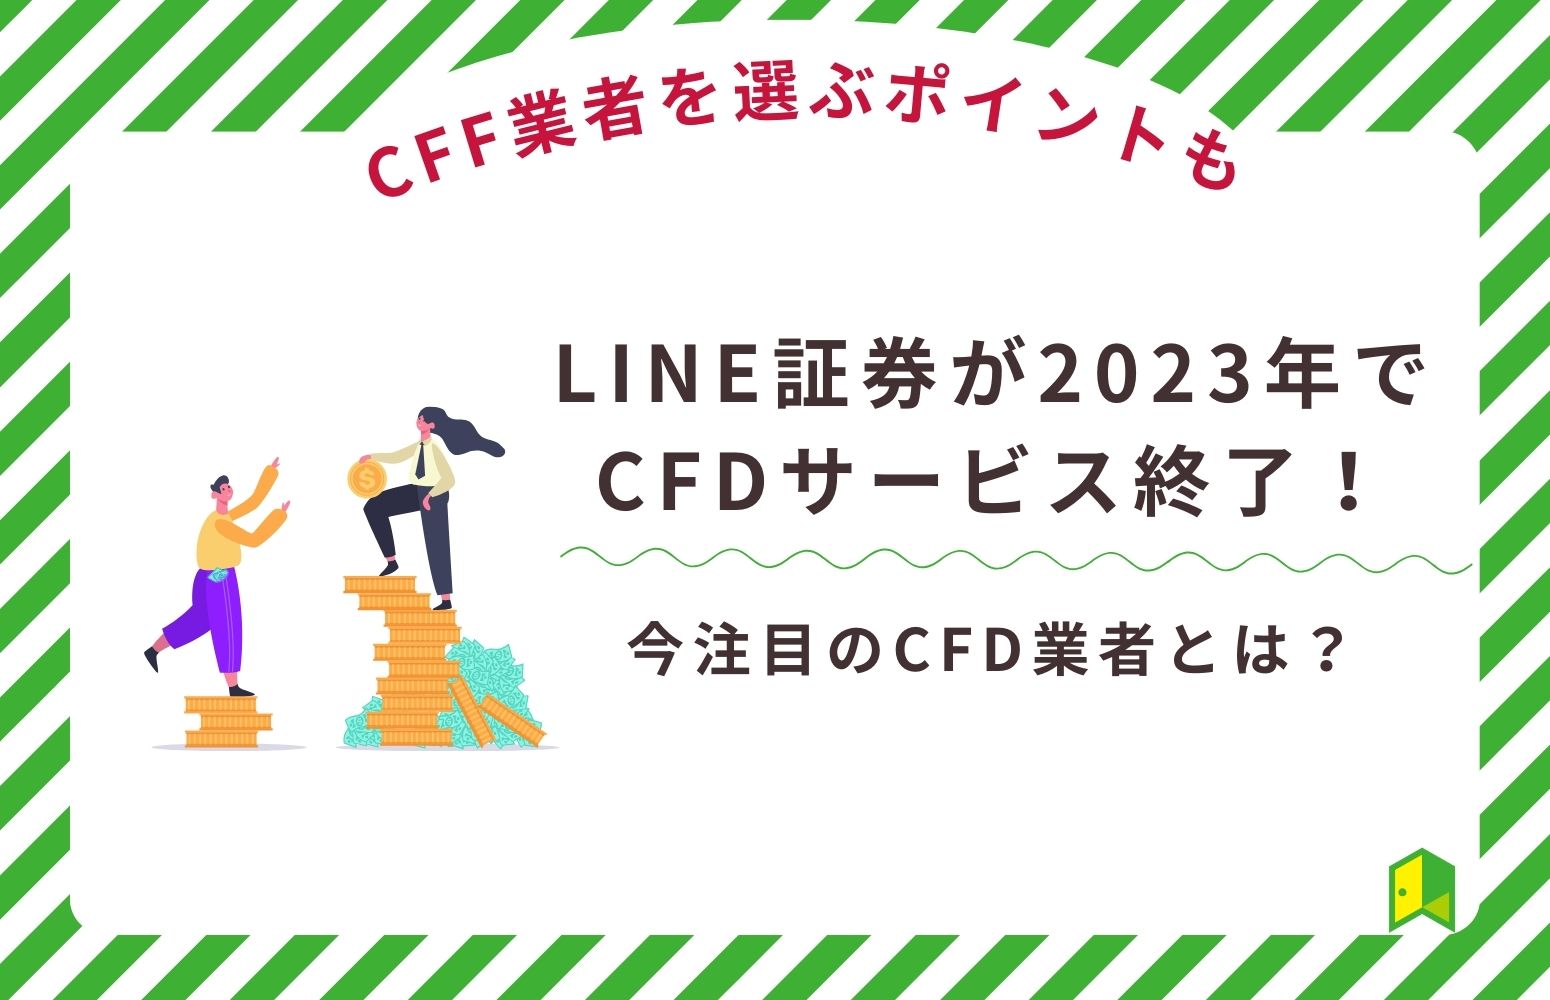 LINE証券が2023年でCFDサービス終了